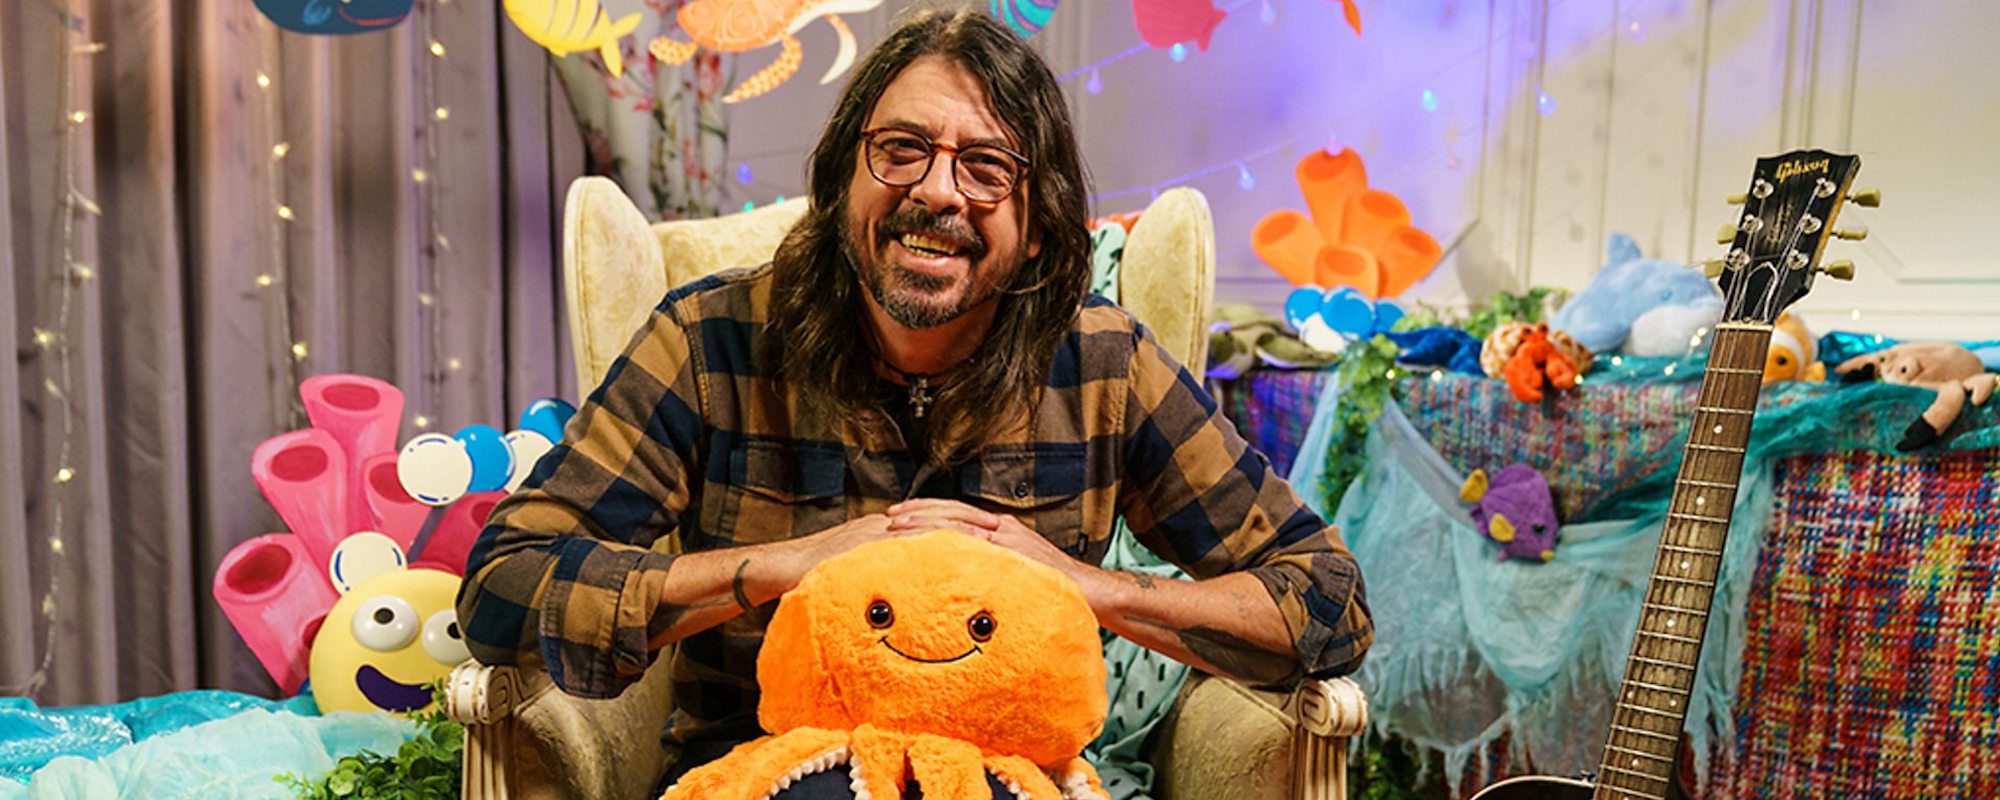 Dave Grohl Recites Ringo Starr Book “Octopus’s Garden” on BBC